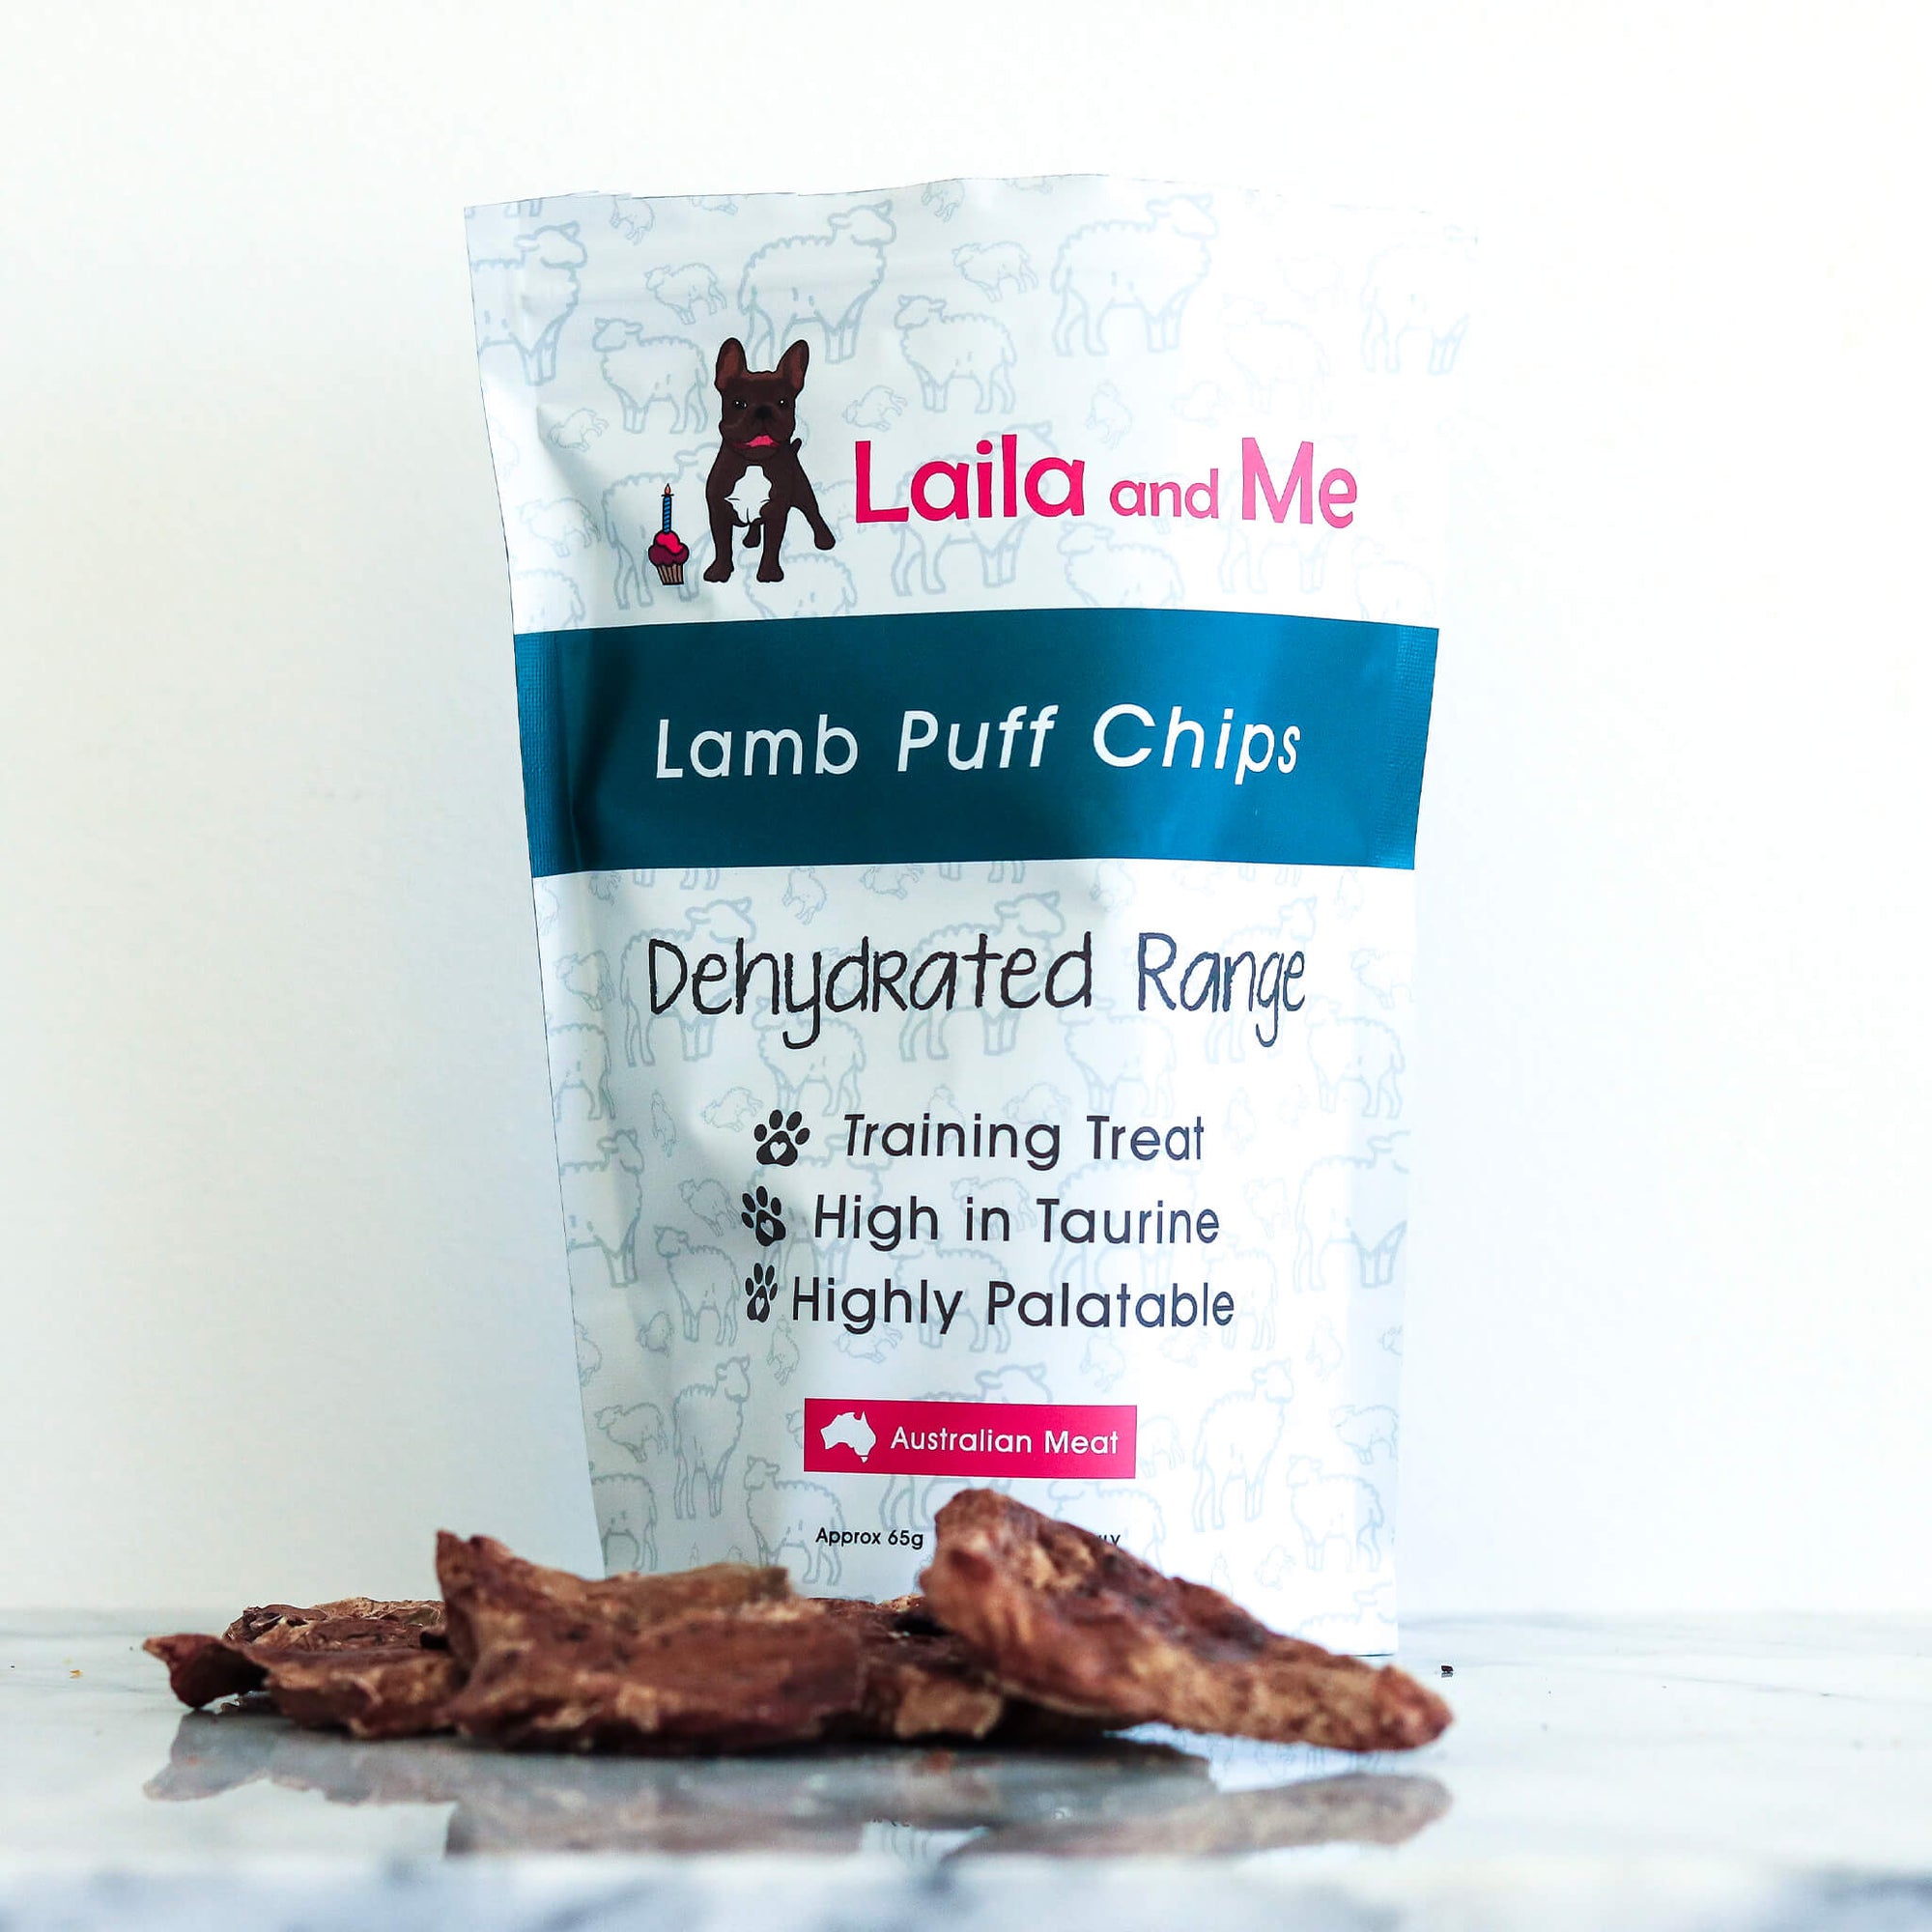 lamb puff chips pet treats - laila and me